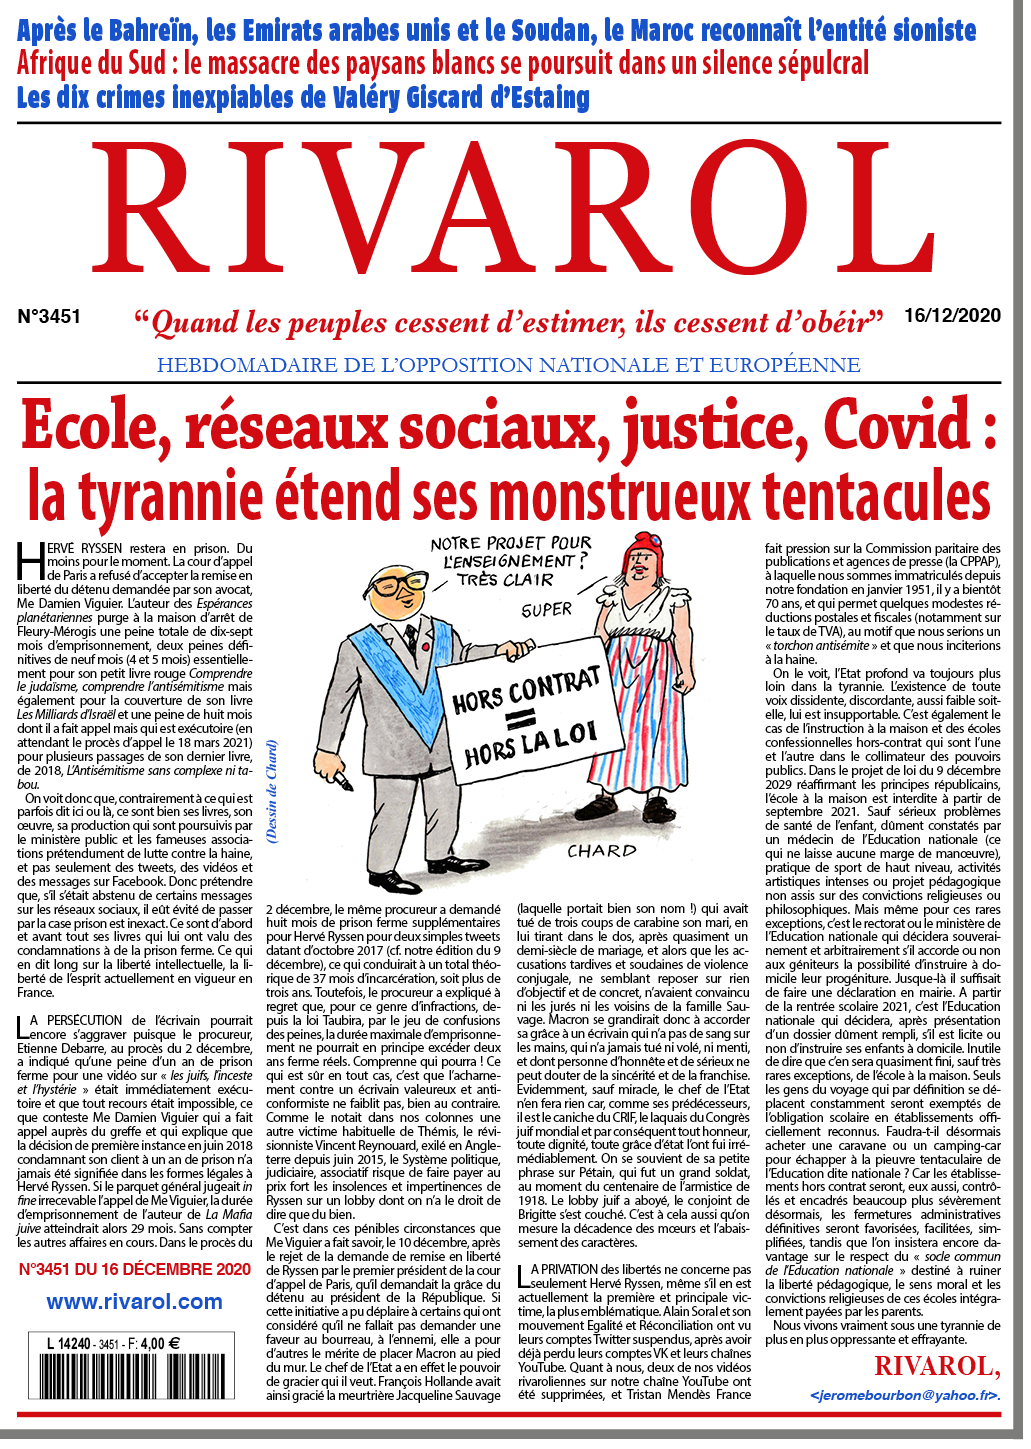 Rivarol n°3451 du 16/12/2020